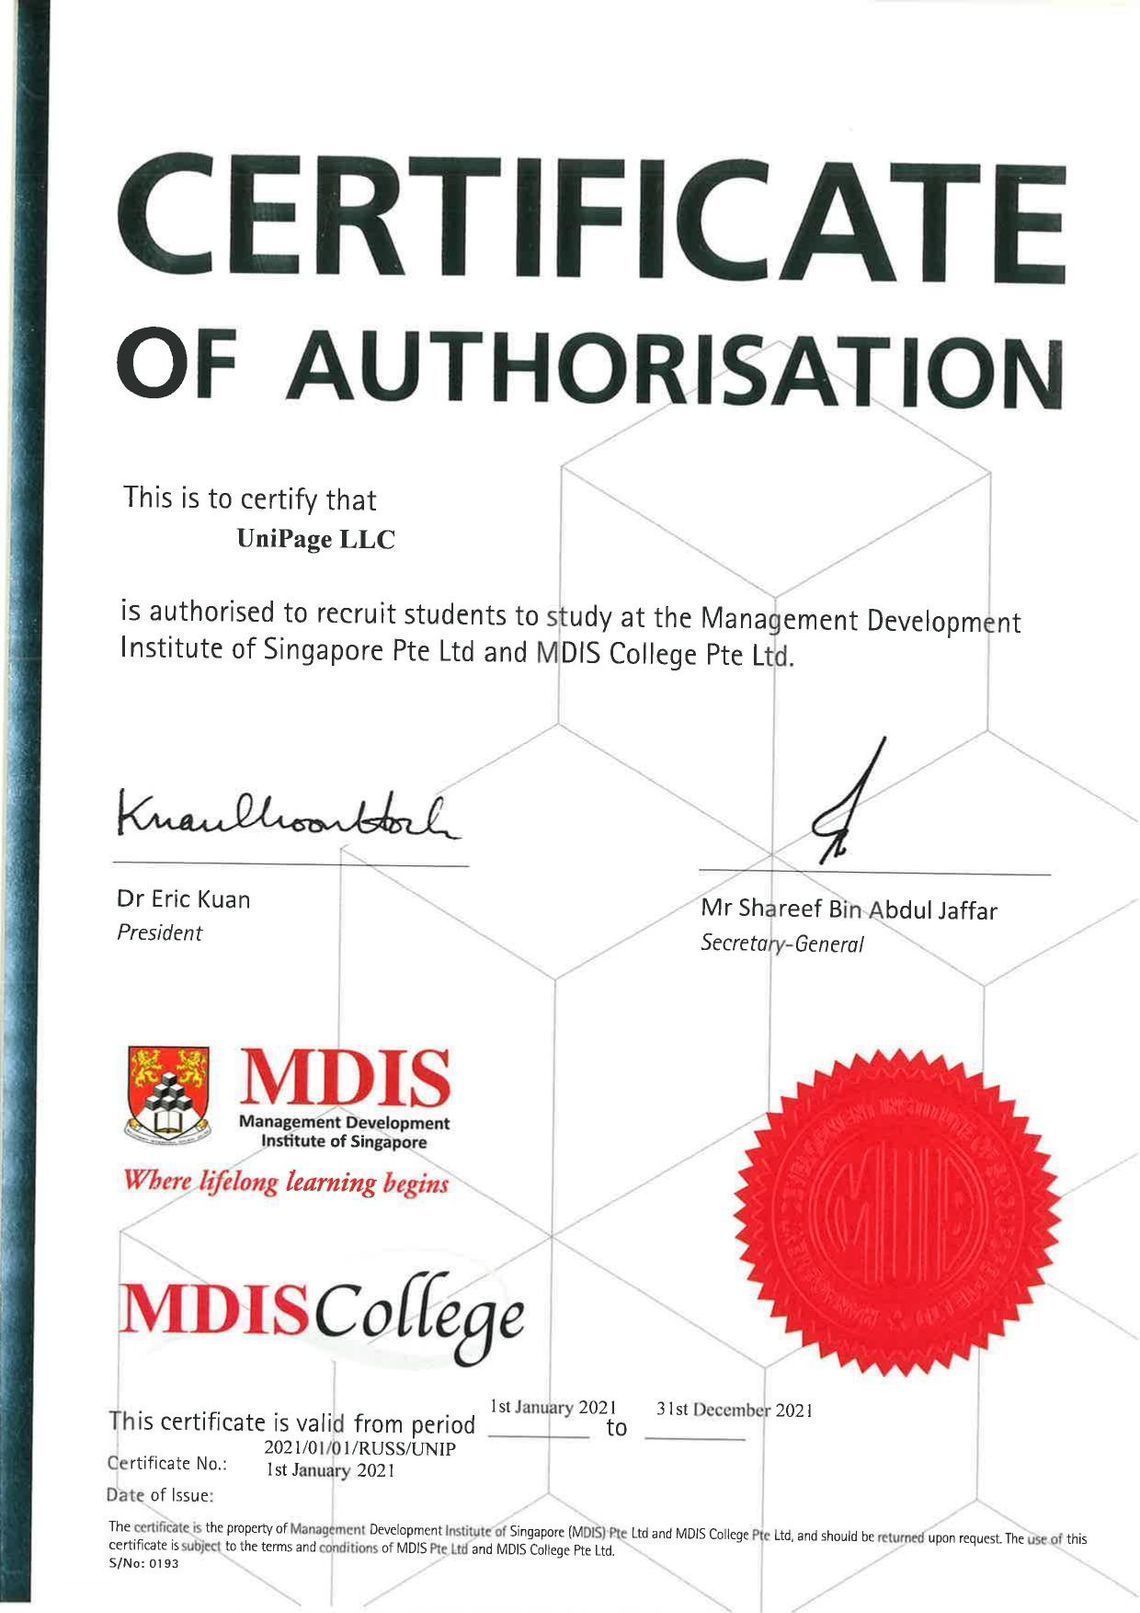 MDIS Certificate of Authorisation